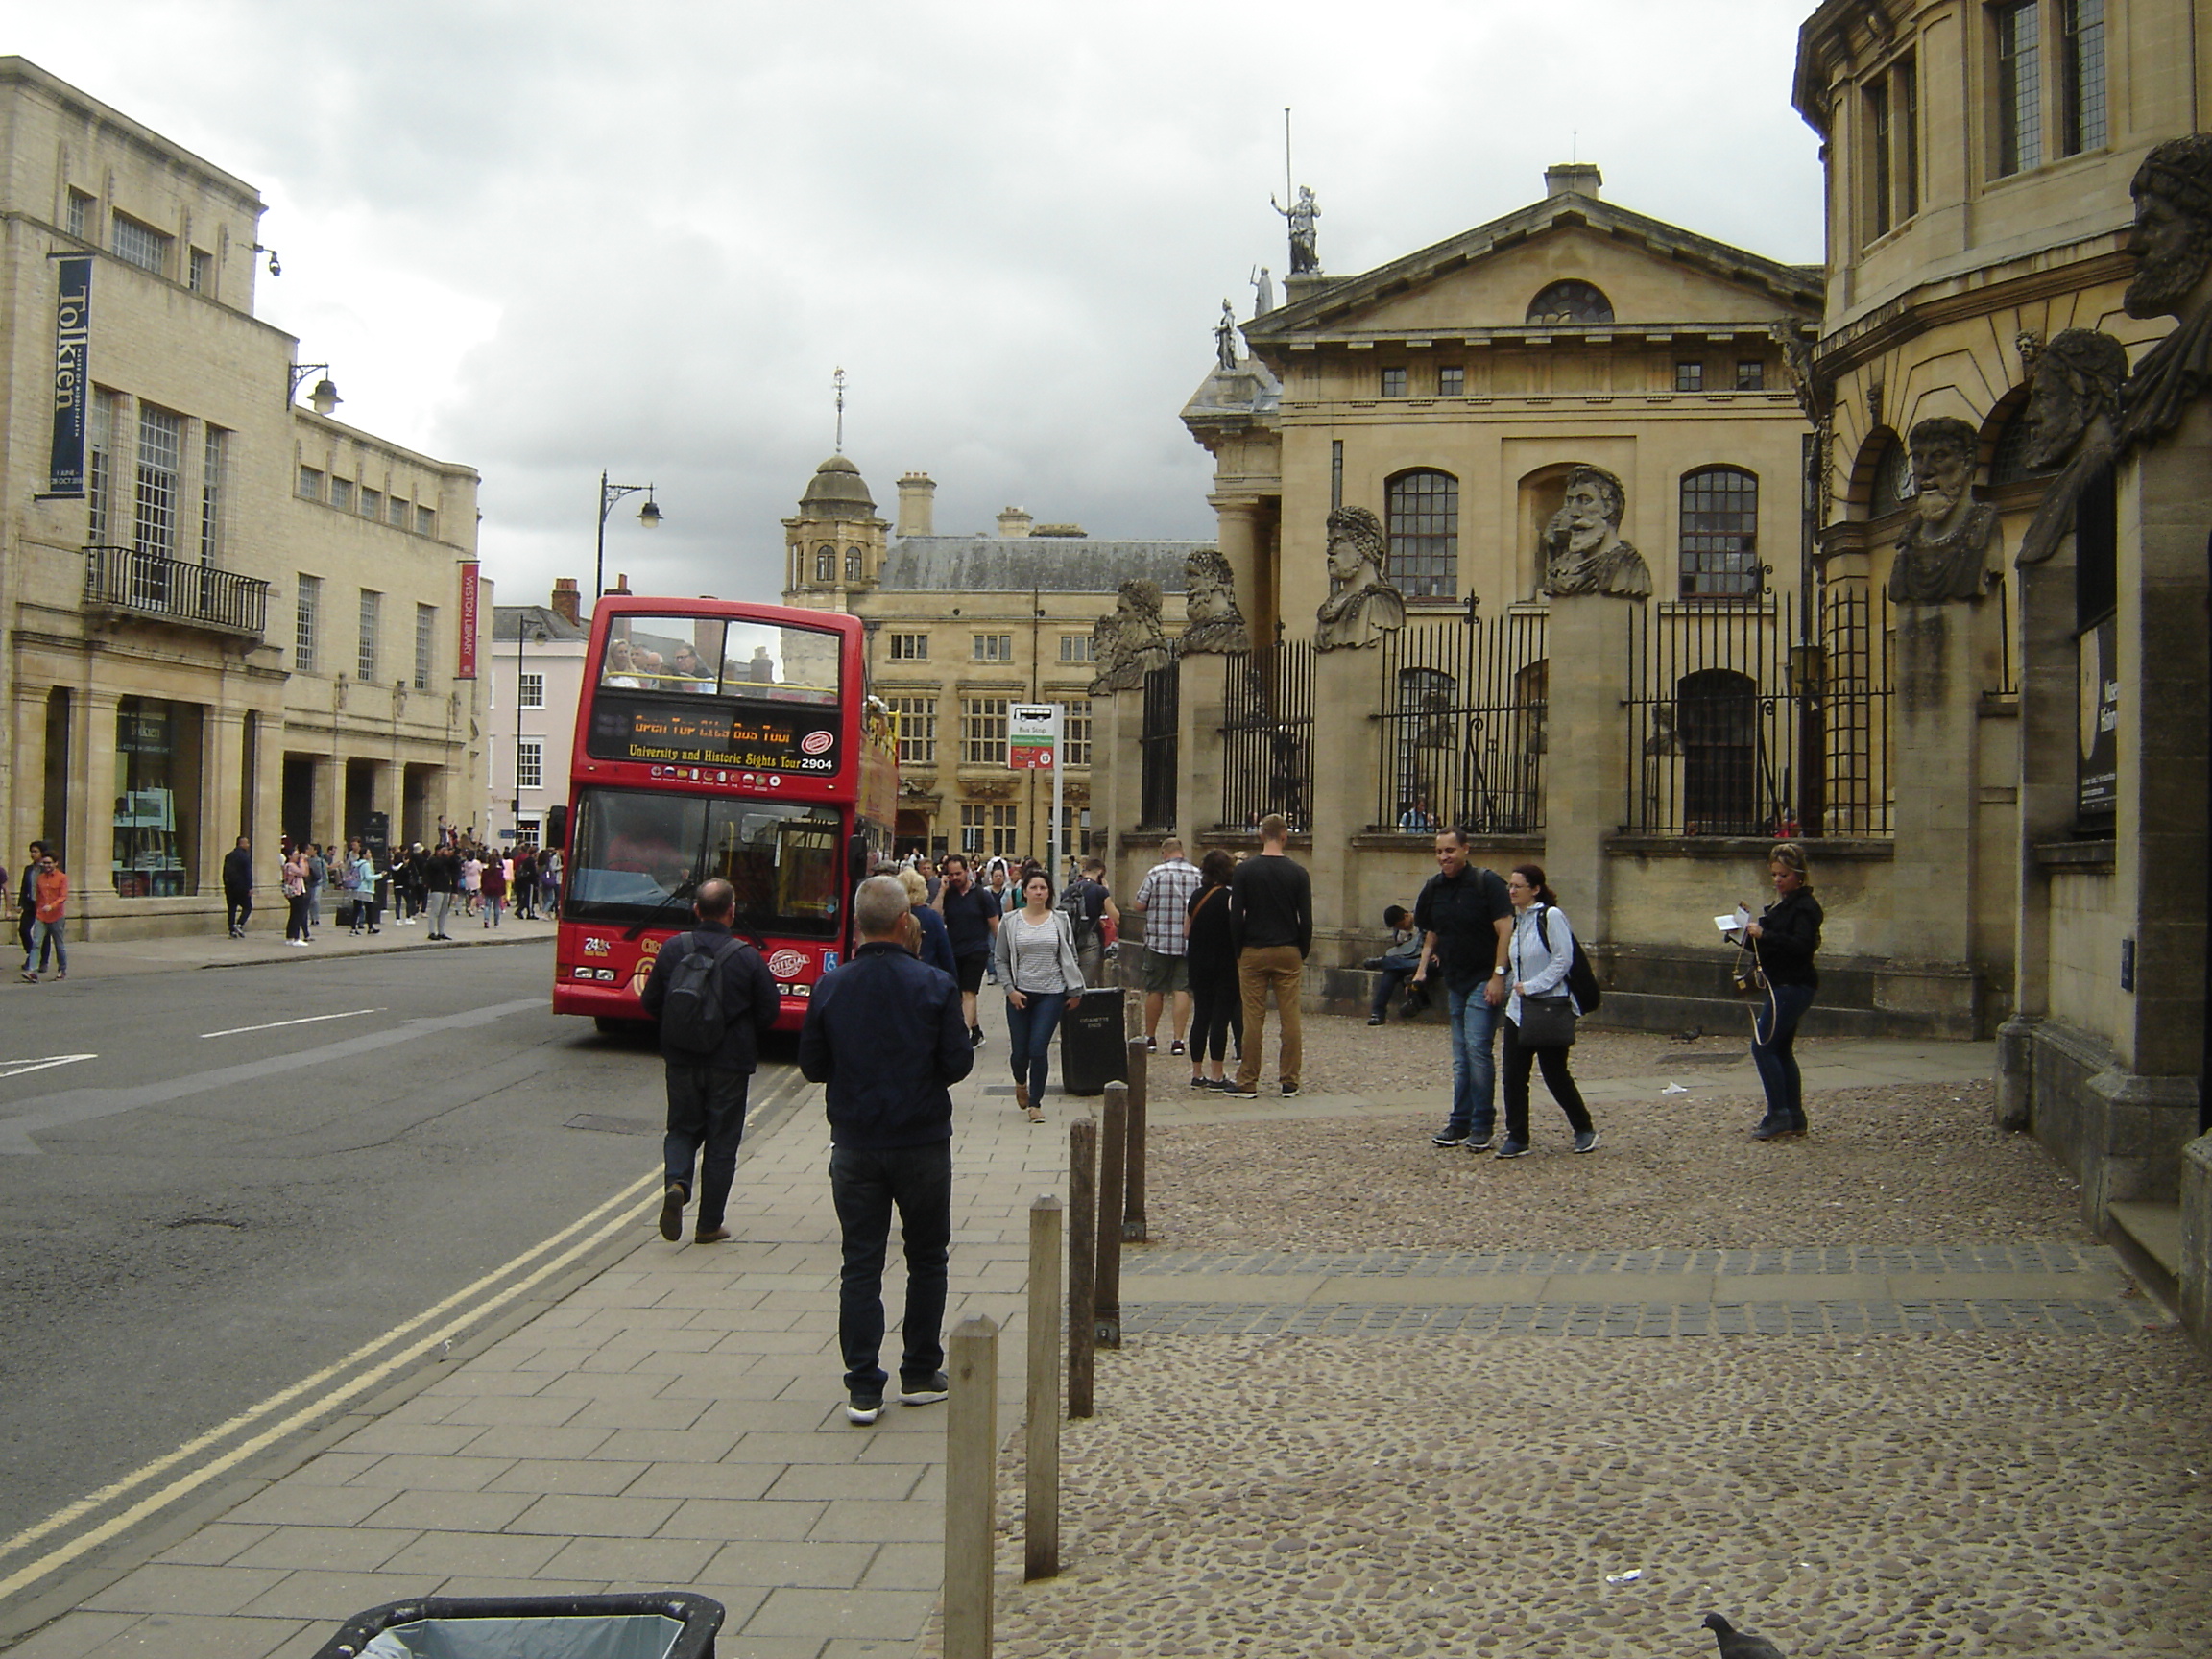 Drab people in Broad Street, Oxford